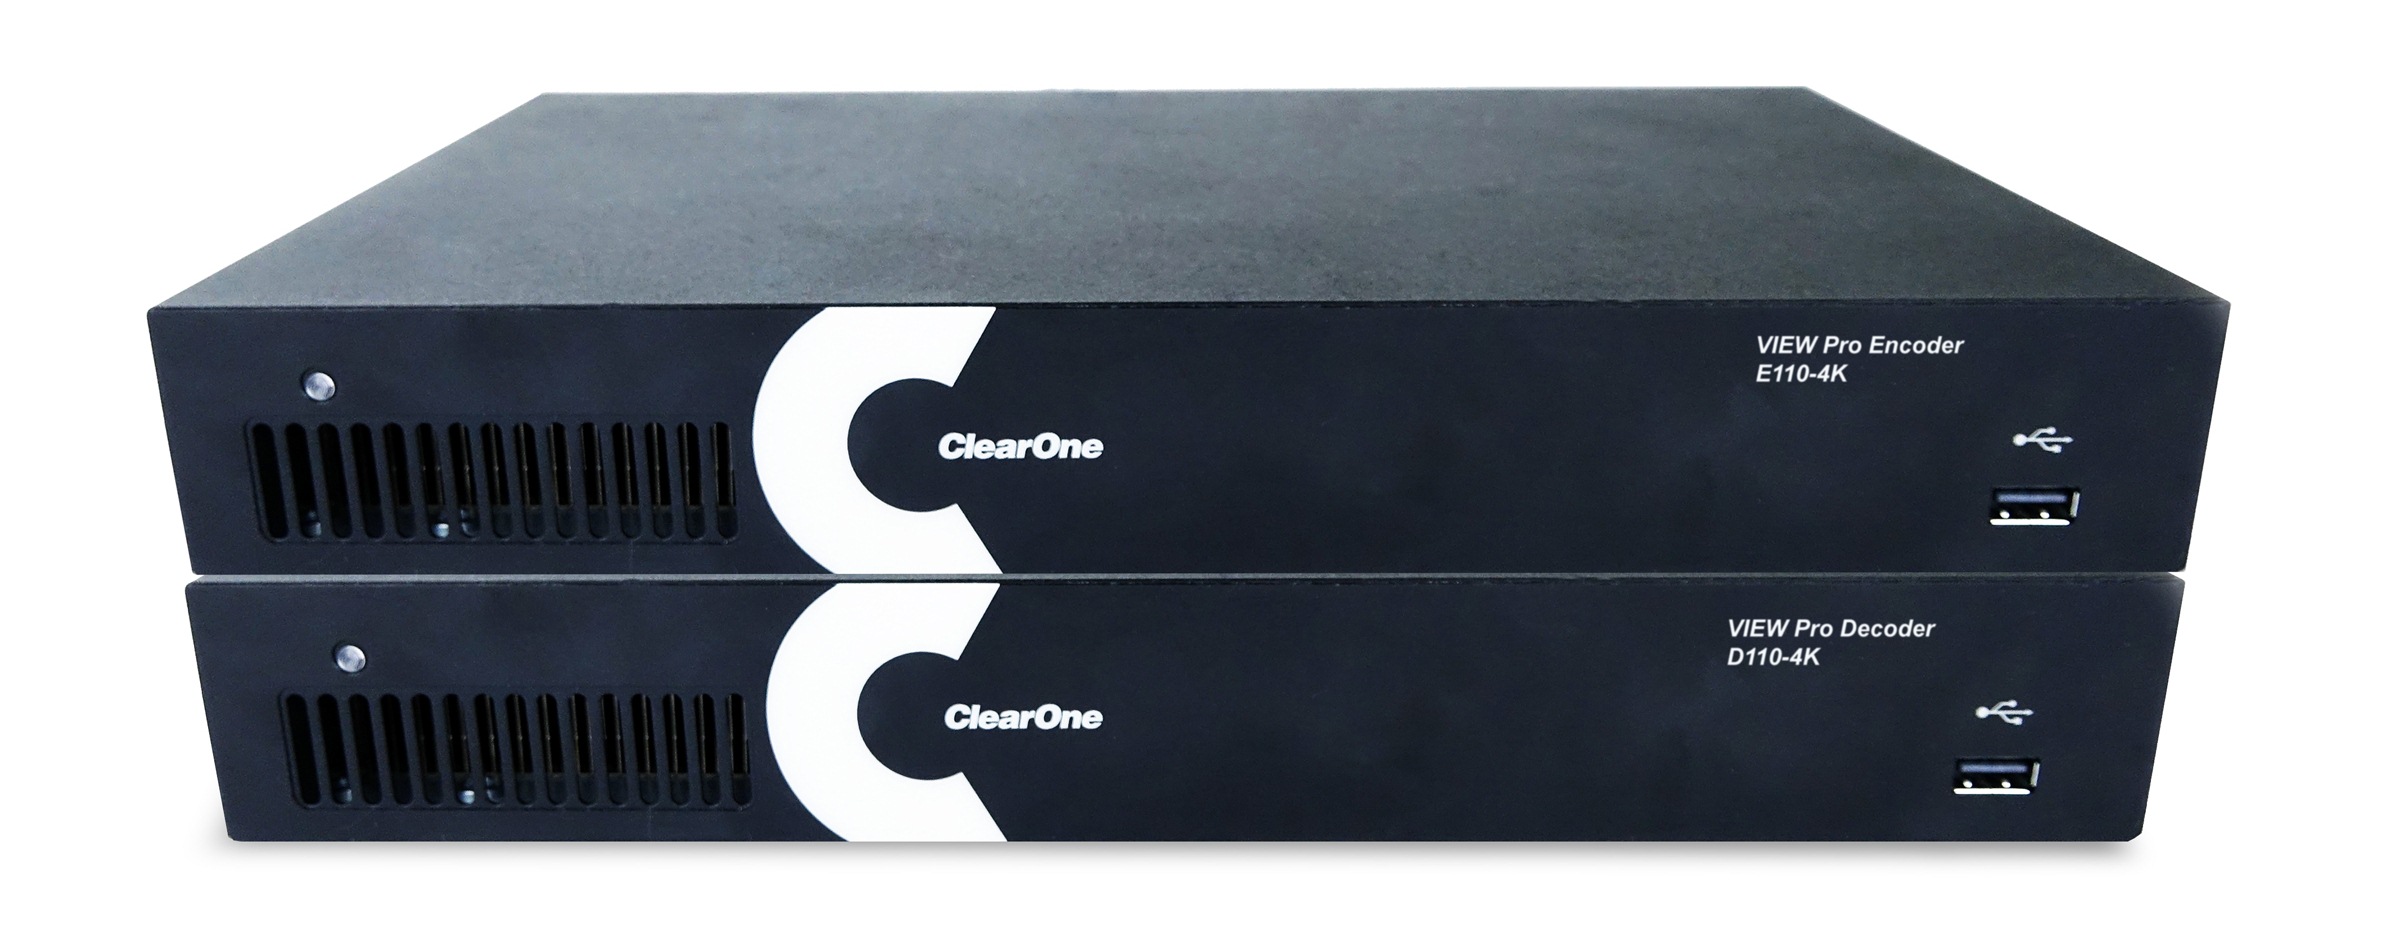 ClearOne анонсировала новую линейку 4K IP мультимедиа-продуктов VIEW Pro 4K 